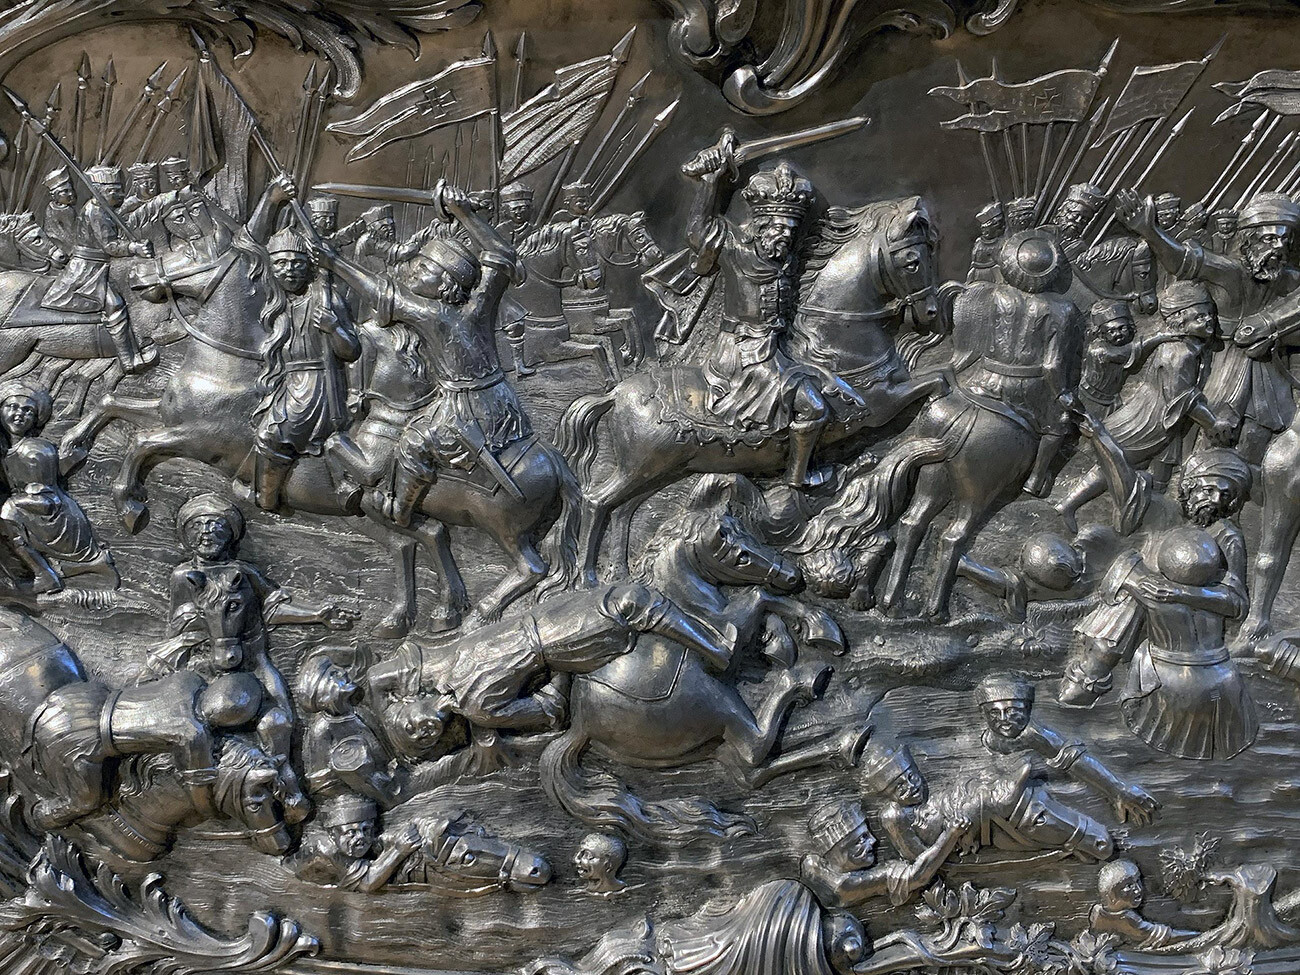 Batal bas-reliefs